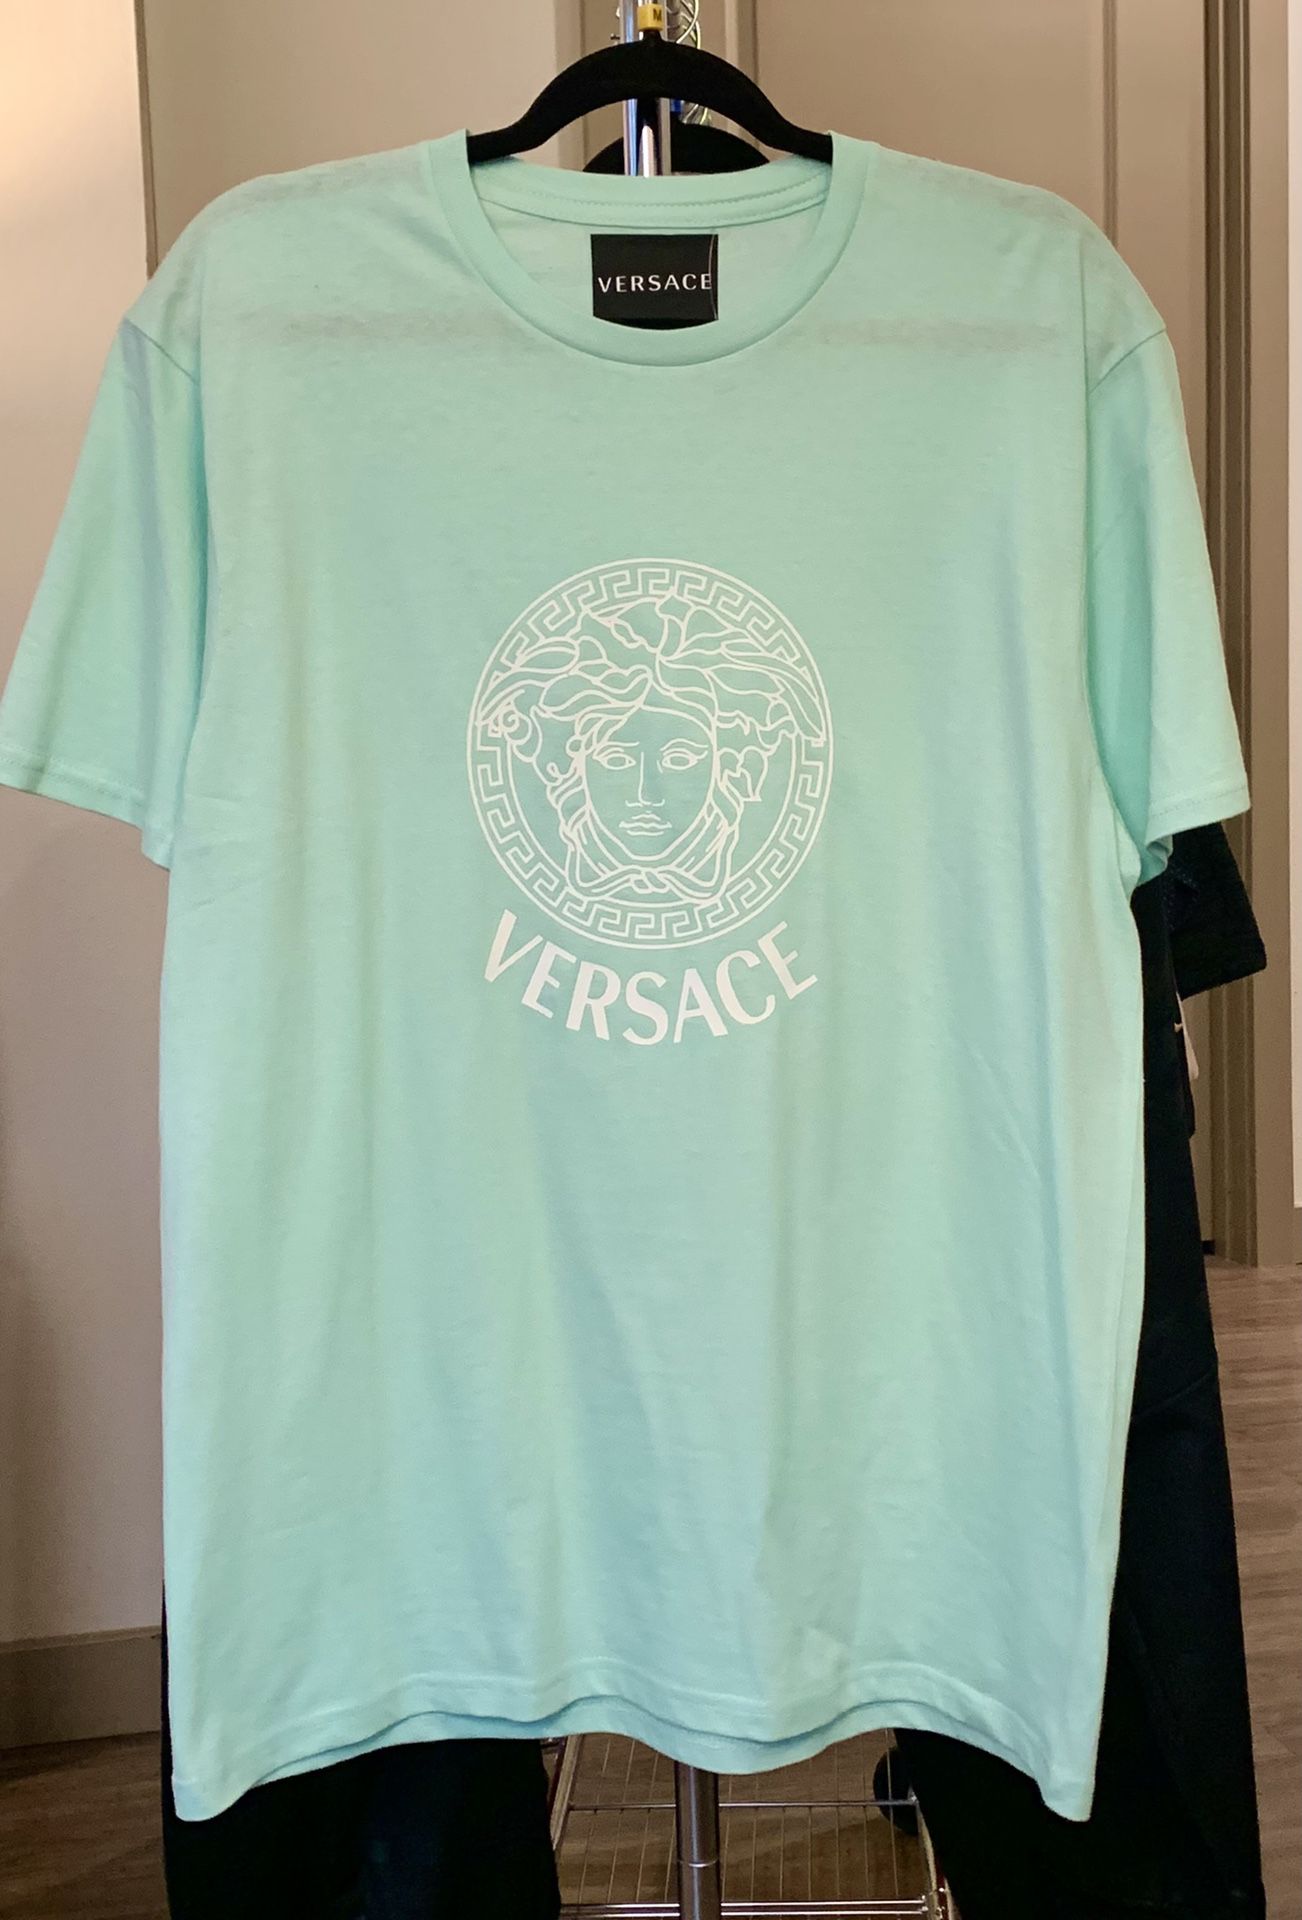 Versace T-shirt Size Medium And Large 